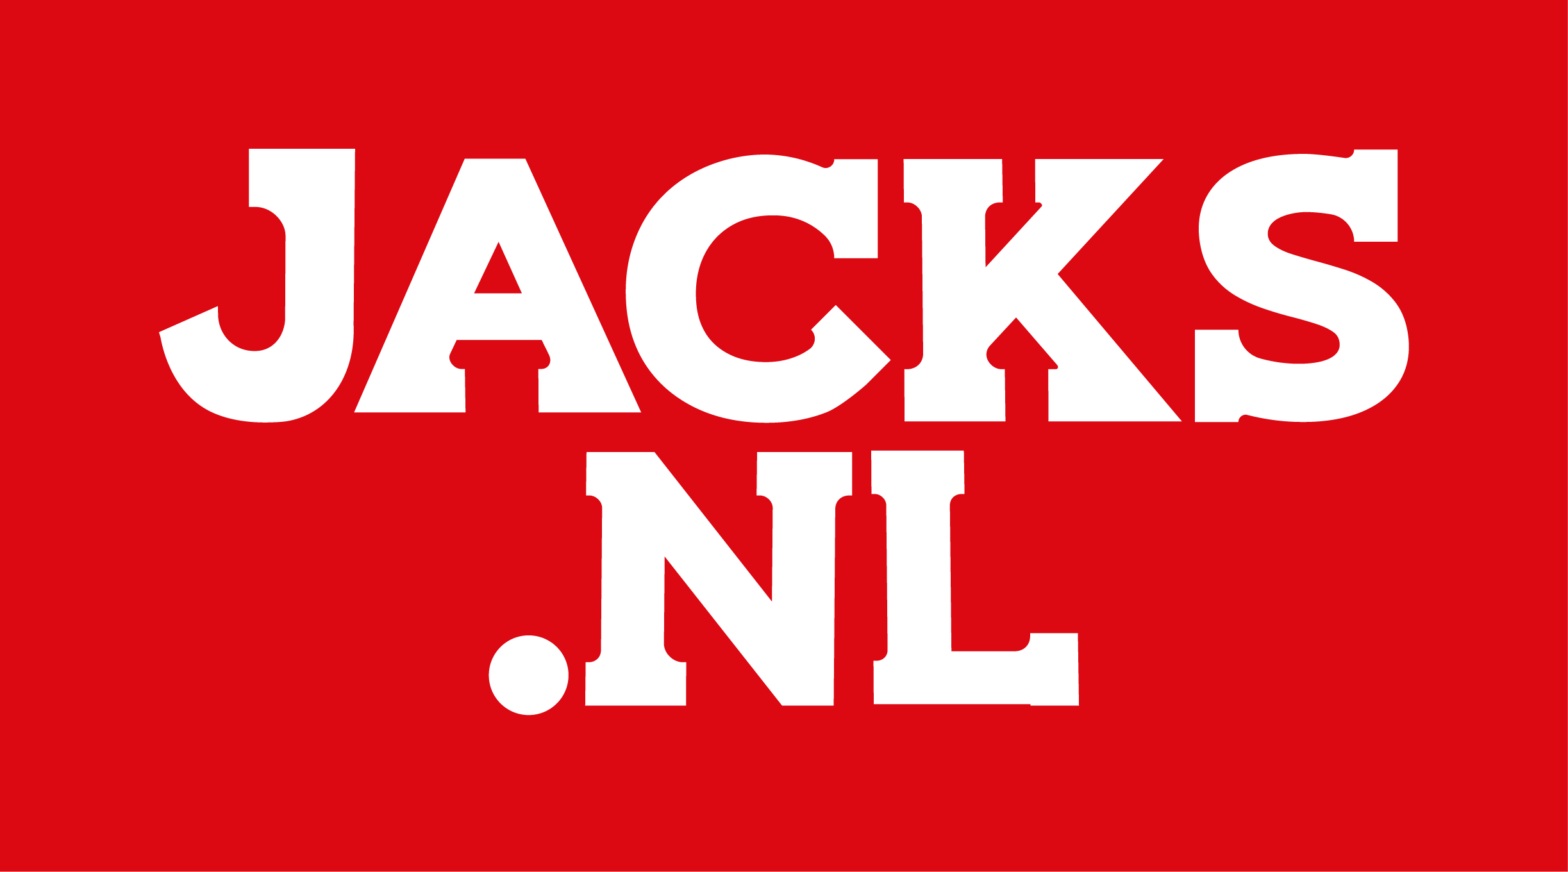 Jacks logo